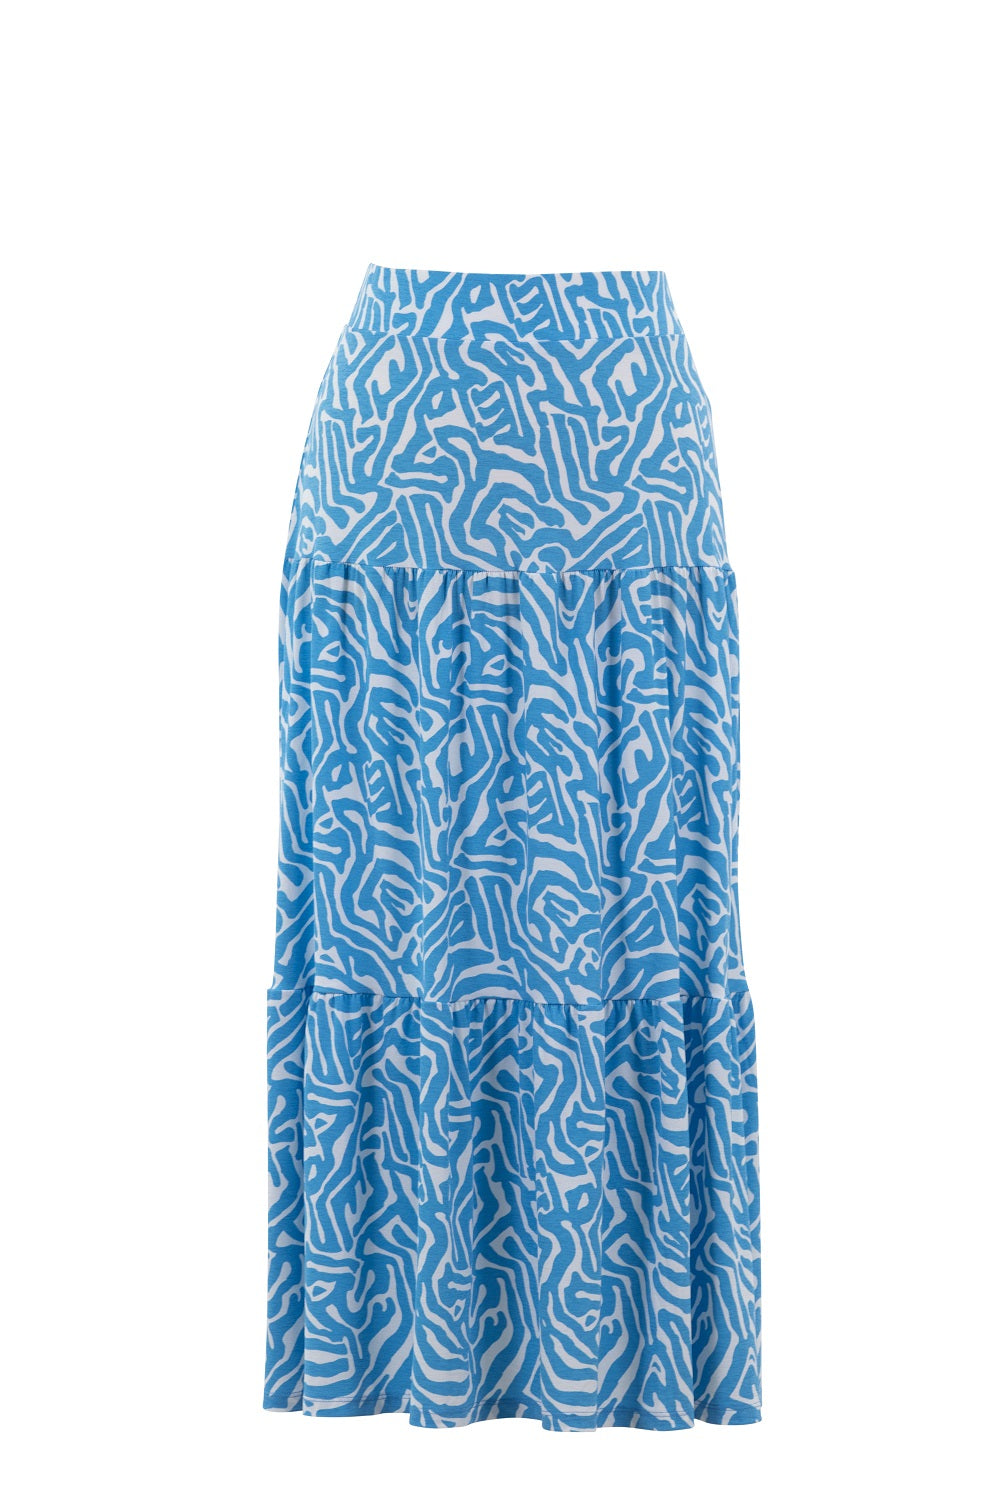 Blue & White Abstract Print Maxi Skirt